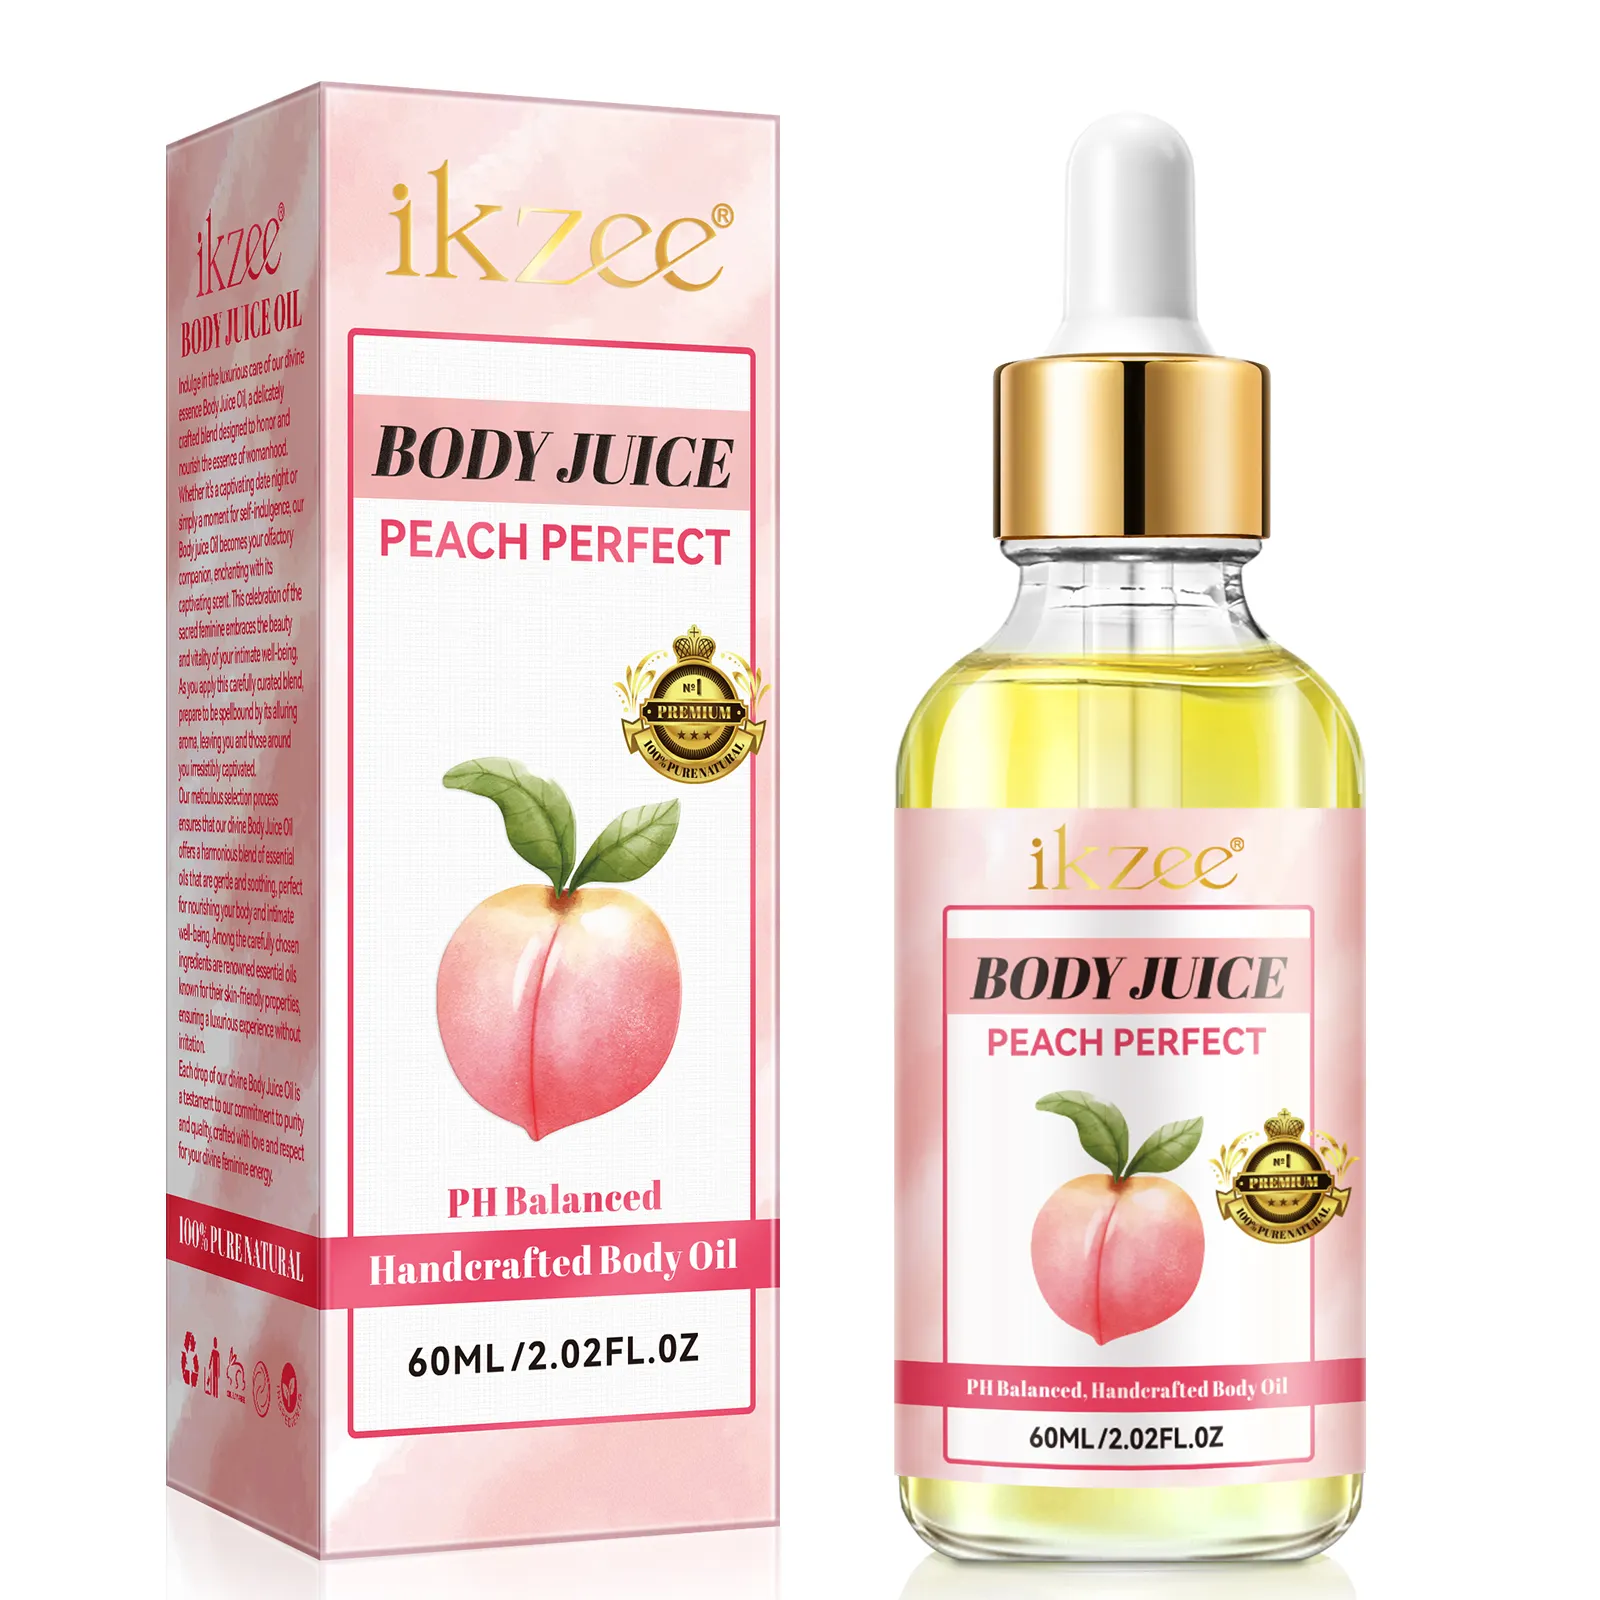 IKZEE deeply nourish anti aging 60ml body essential oil peach wholesale perfume fragrance firming body perfume juice oil